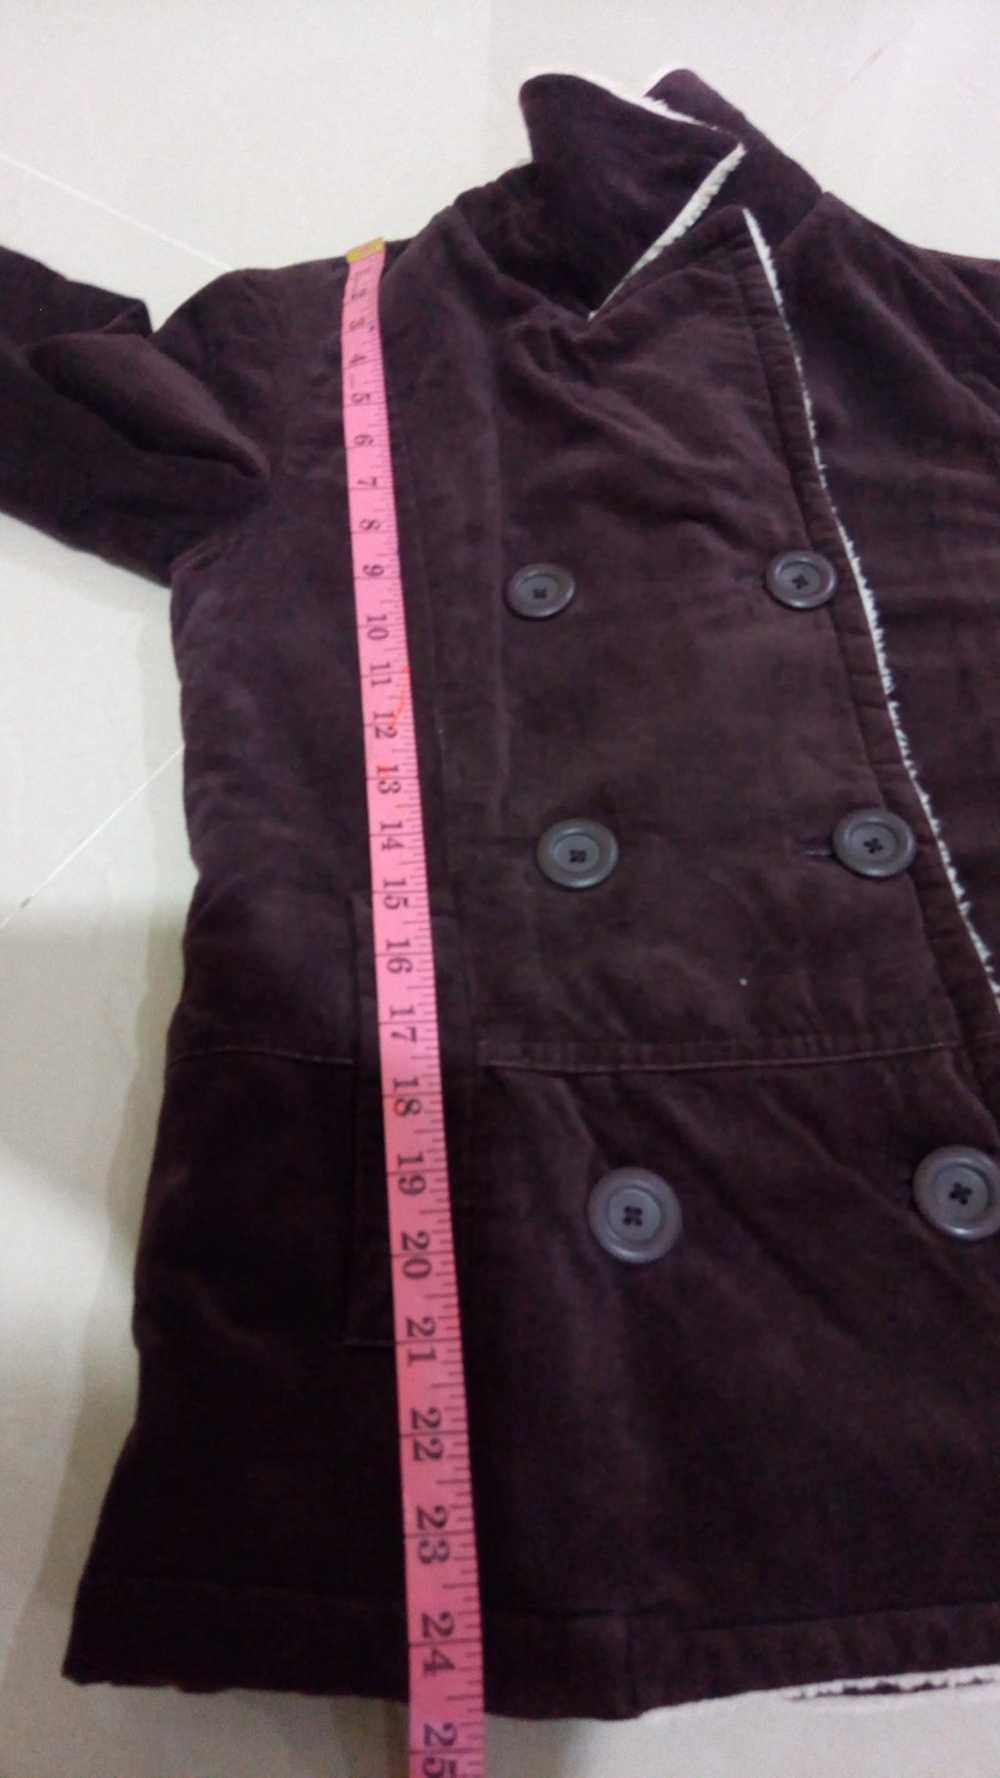 Japanese Brand Giordano Velvet Jacket size S - image 11